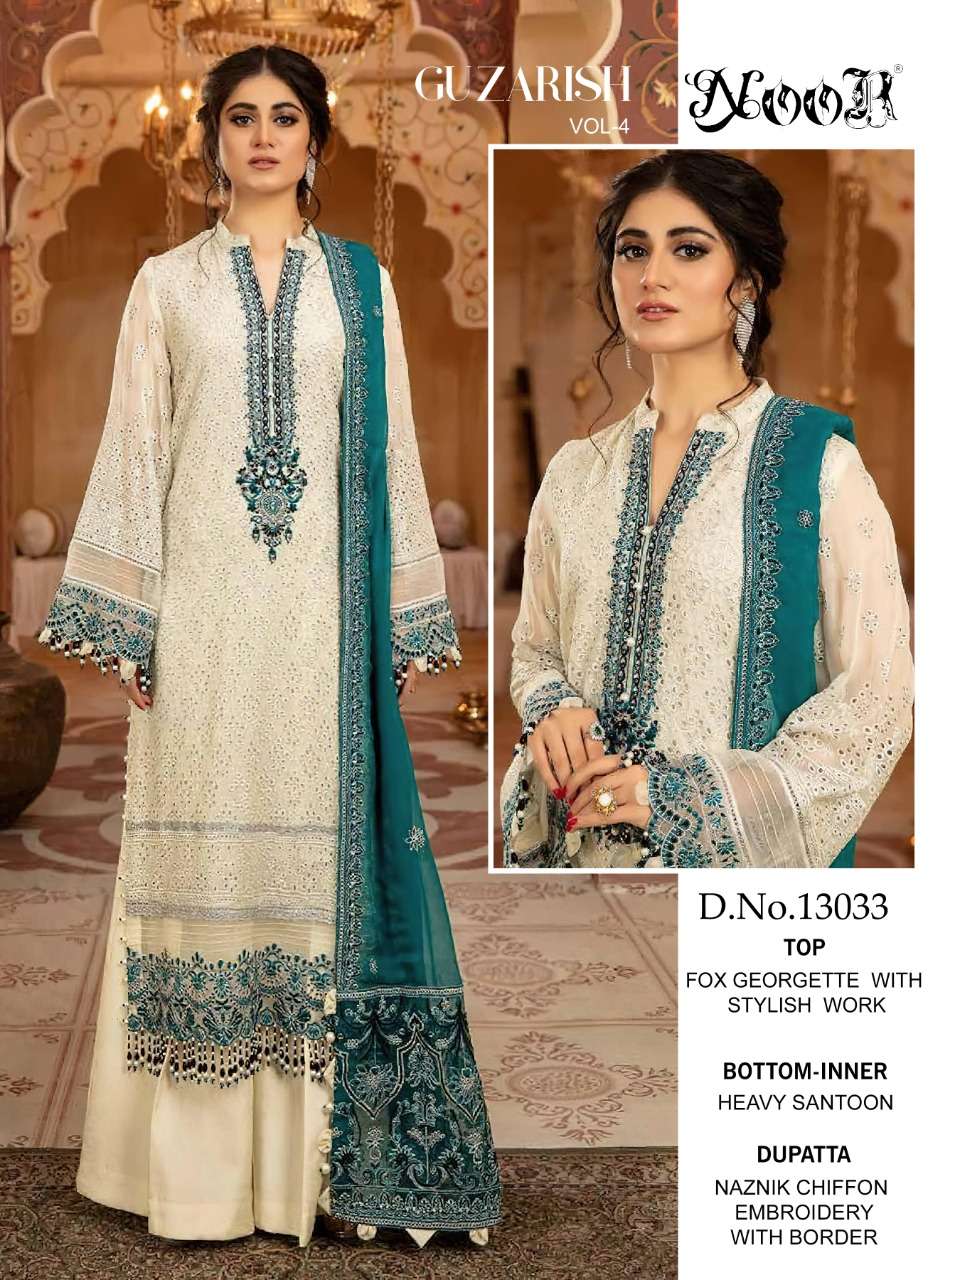 noor guzarish vol 4 heavy embroidery pakistani concept dresses 